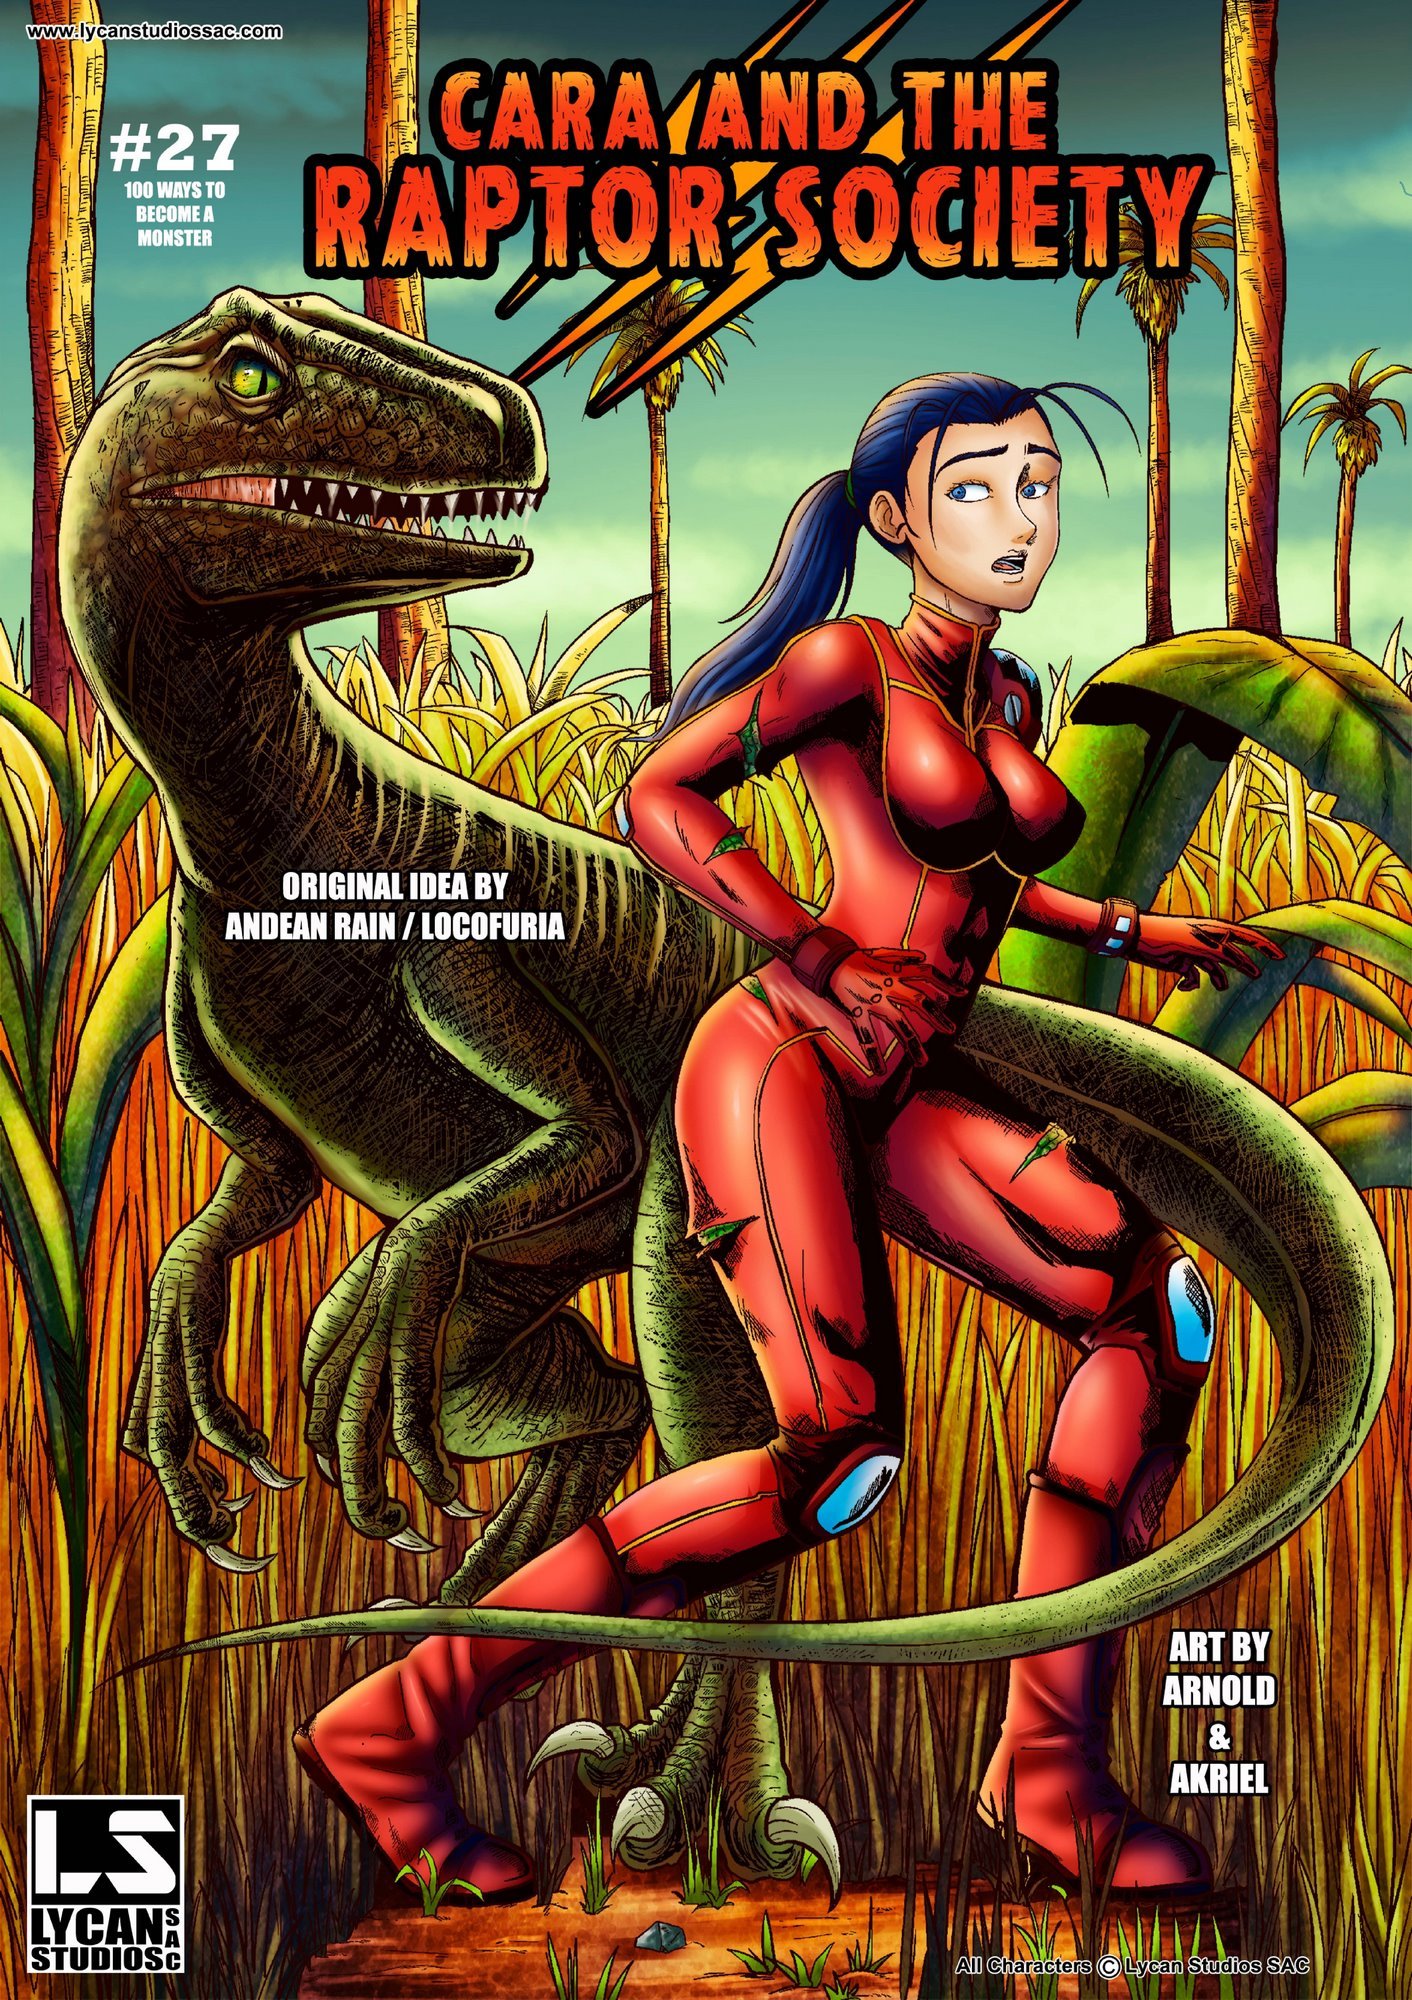 Raptor porn comics